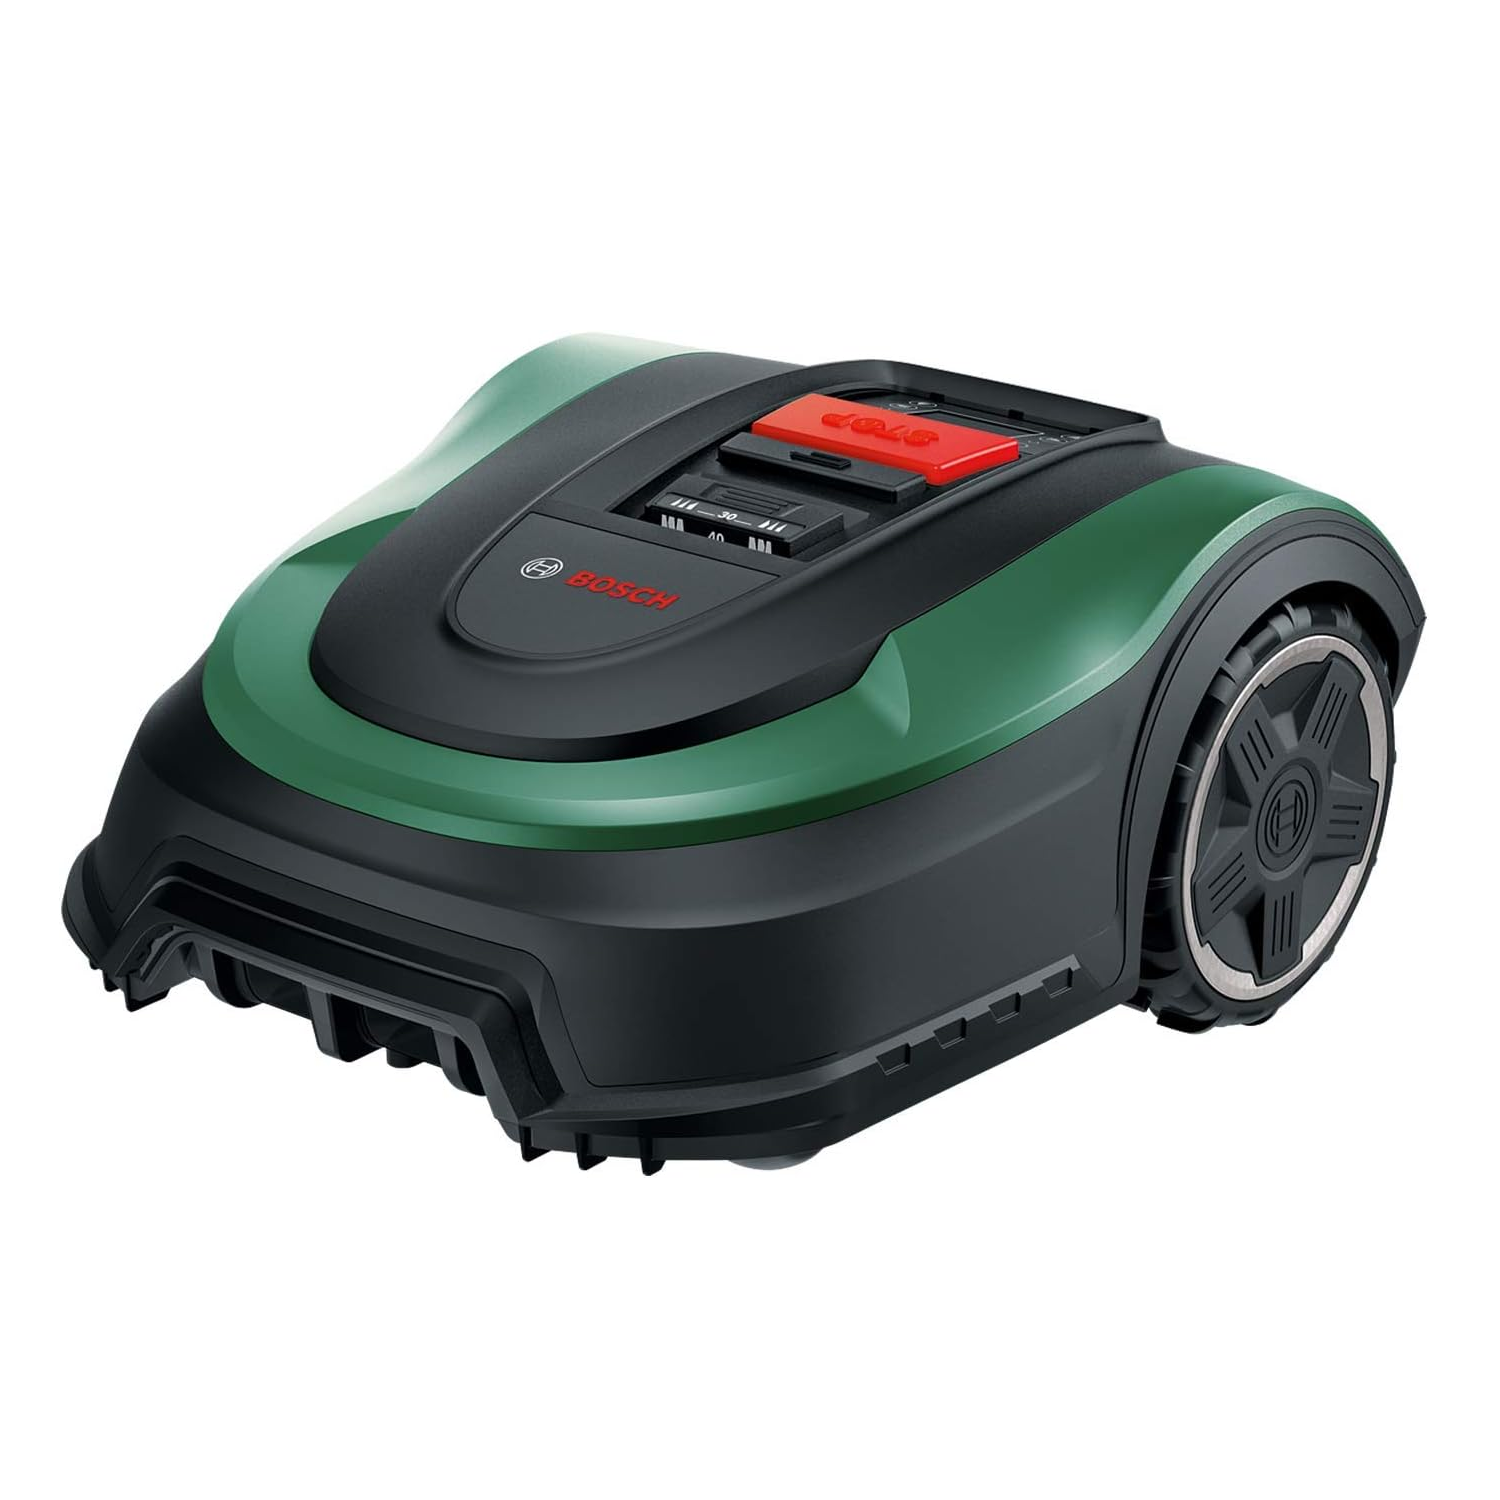 Bosch green indego m+ 700 18v cordless robotic lawn mower 06008b0373